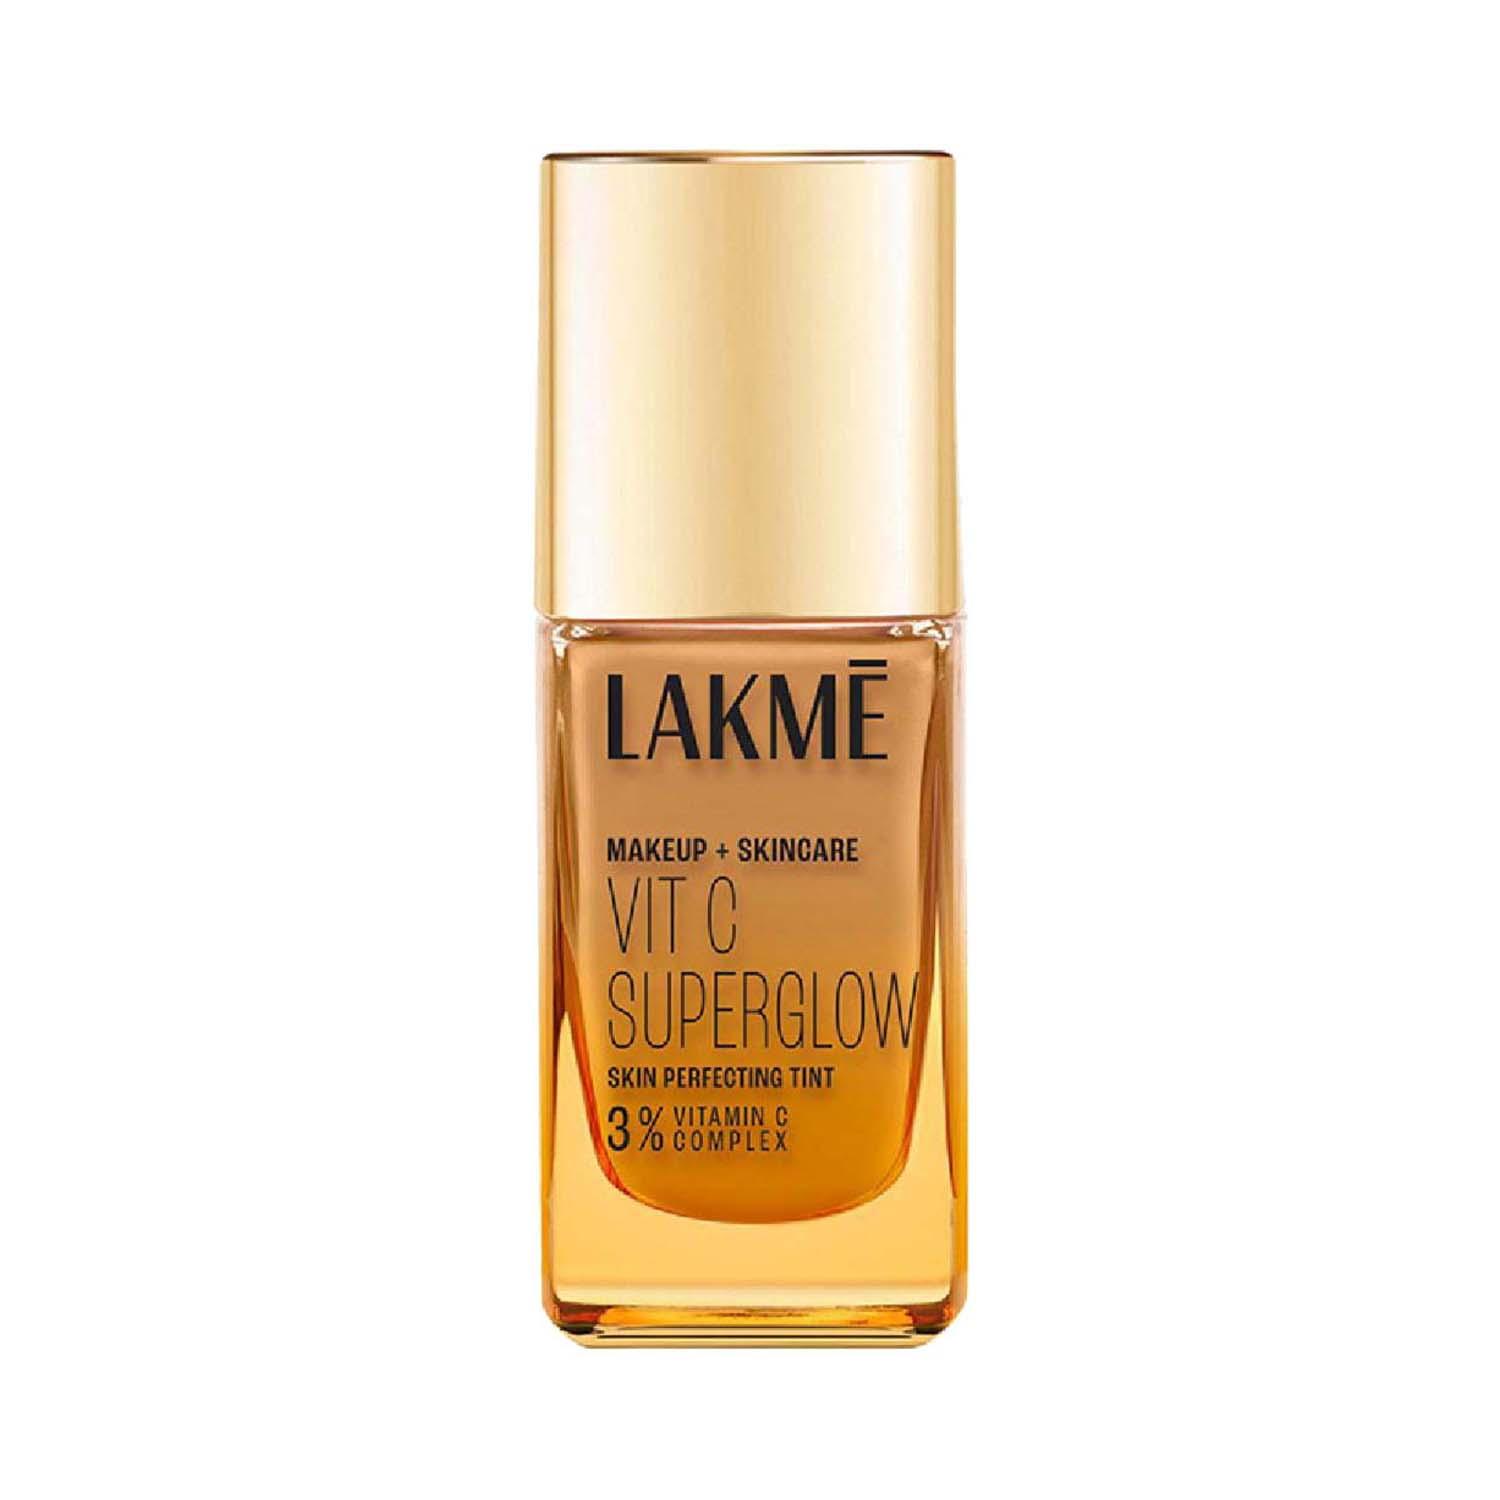 Lakme | Lakme Makeup+Skincare Vit C Superglow Skin Perfecting Tint - Neutral Almond N340 (25 ml)